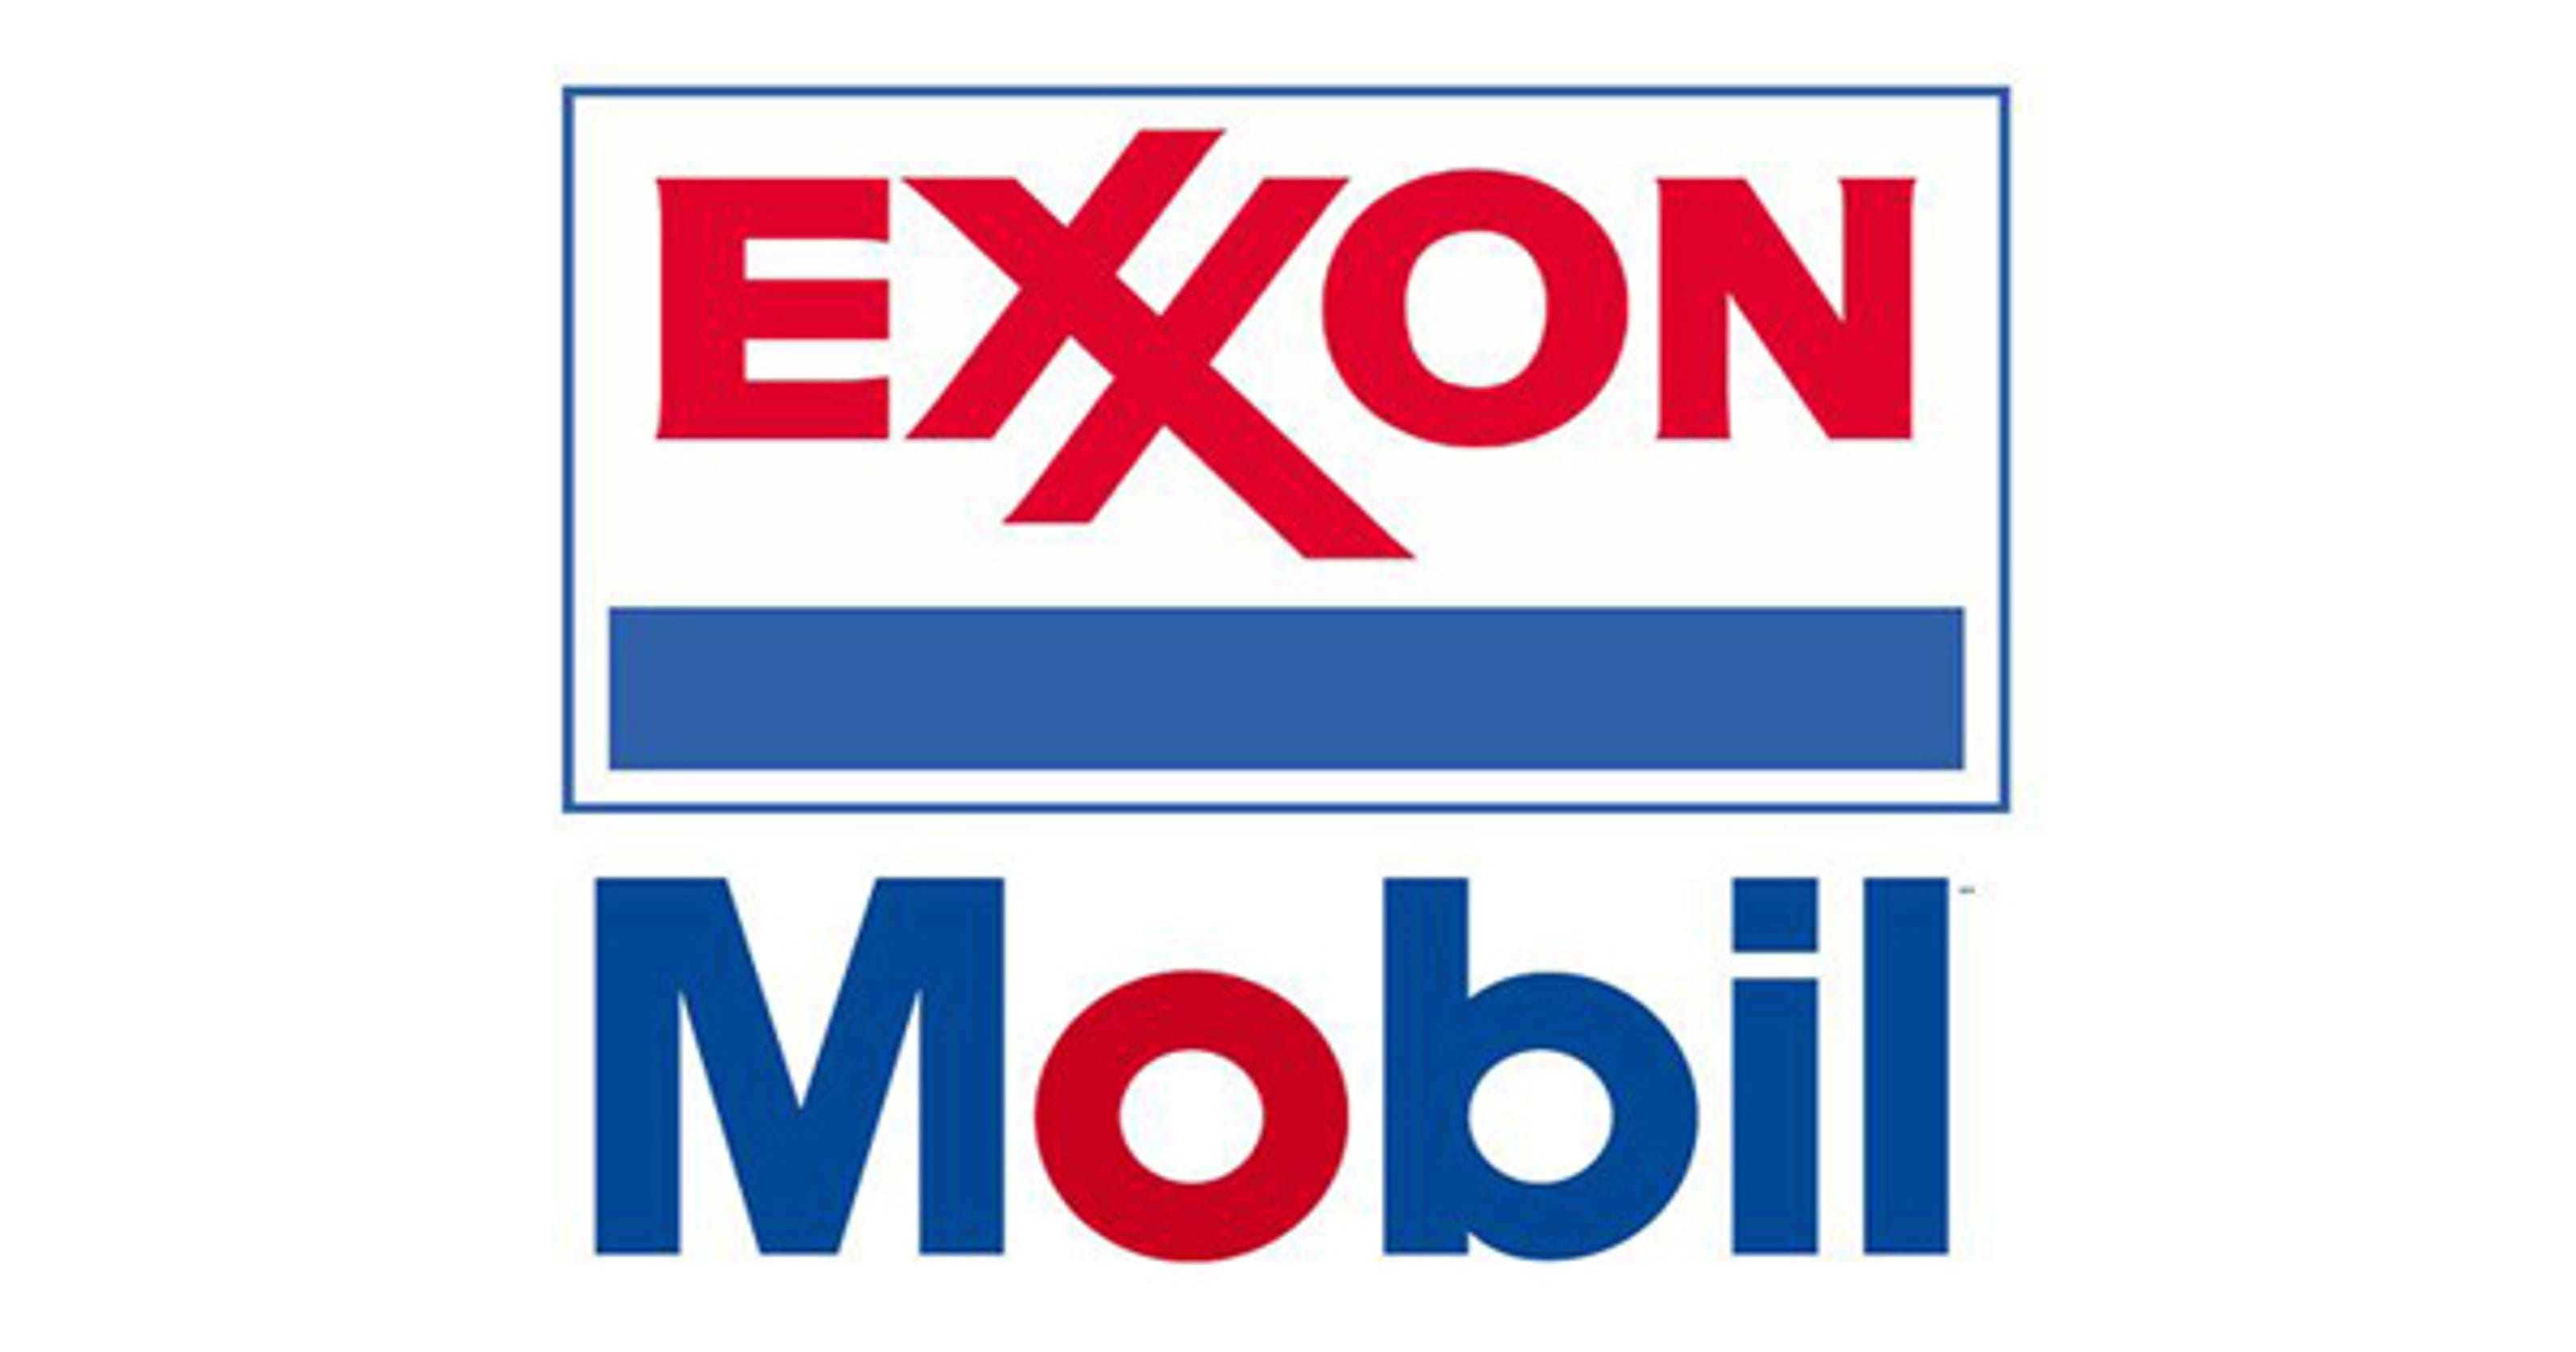 exxon mobil company